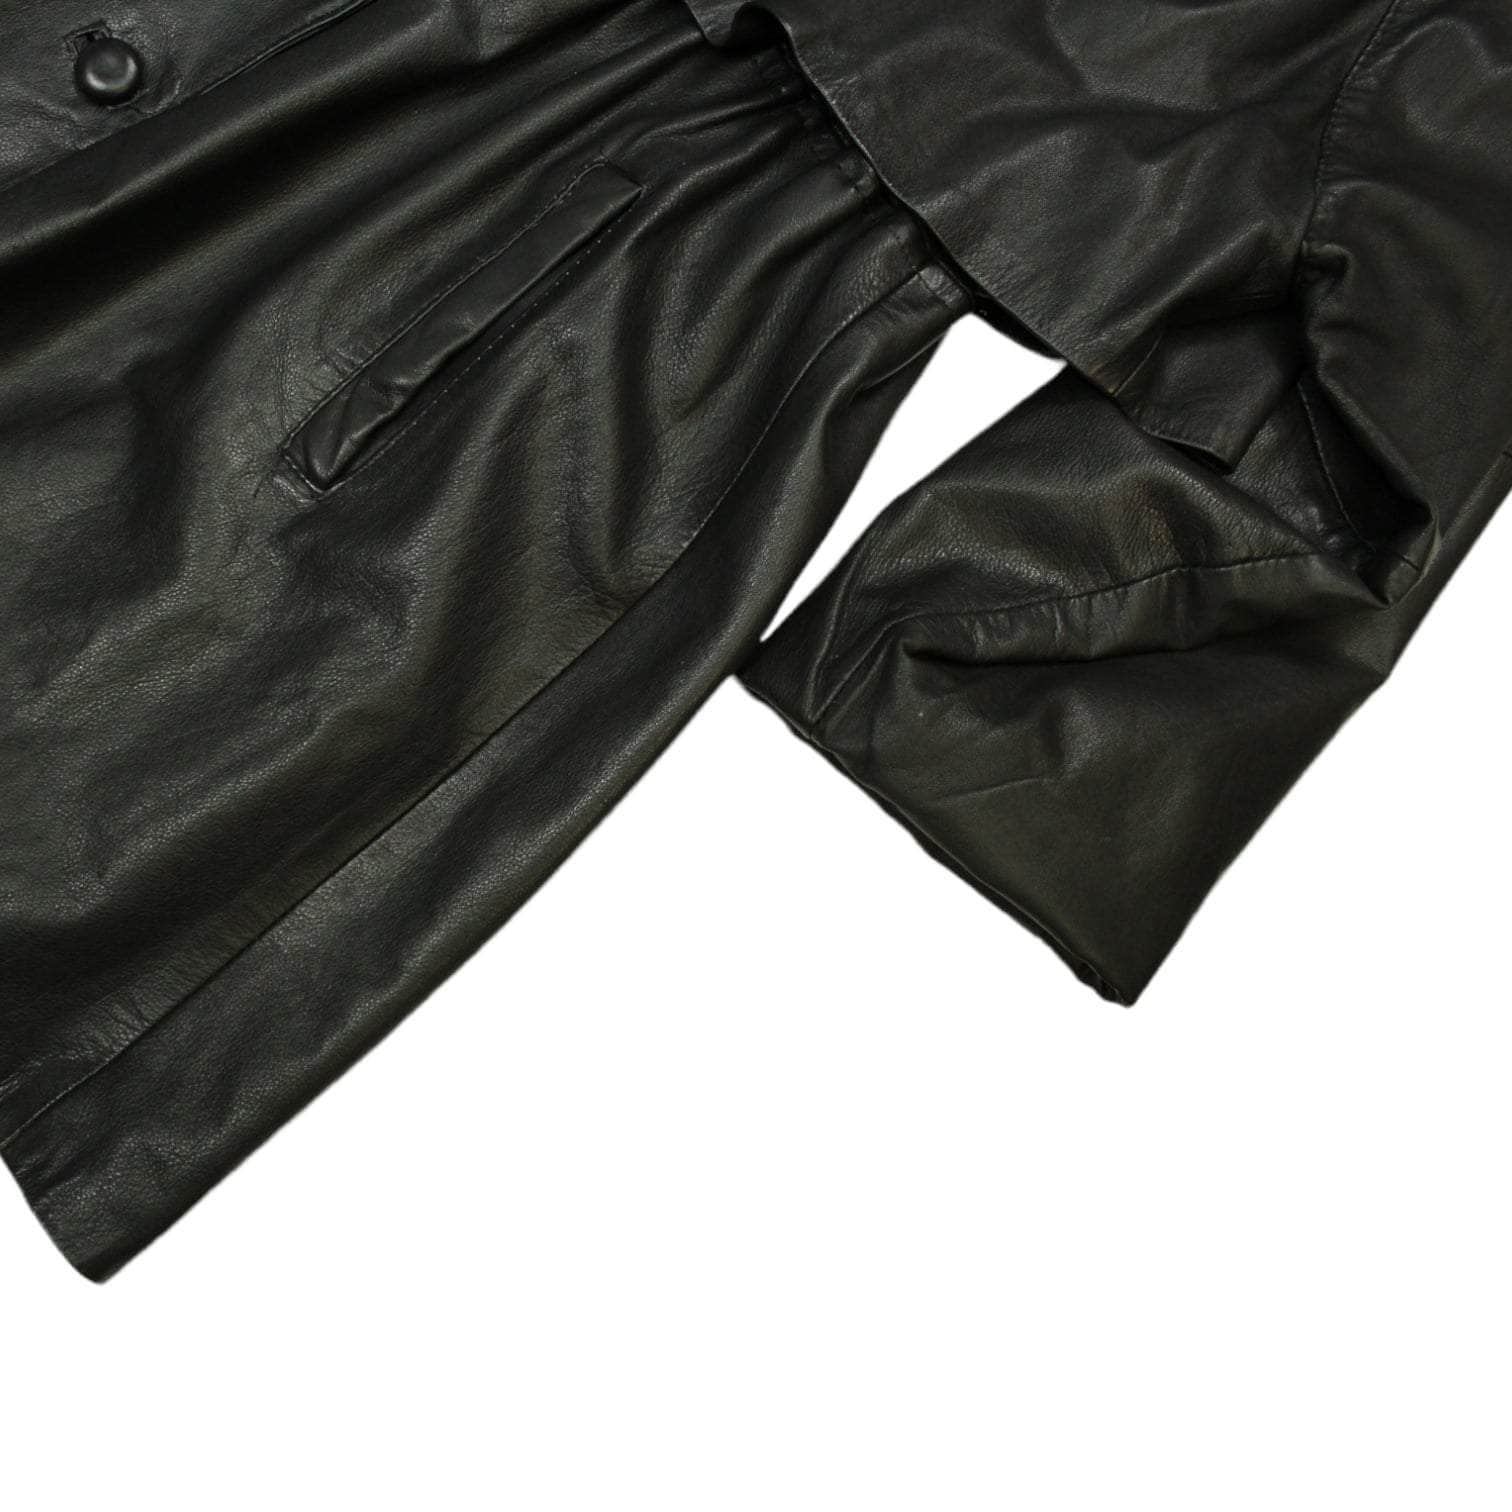 Vintage Black Leather Hooded Coat